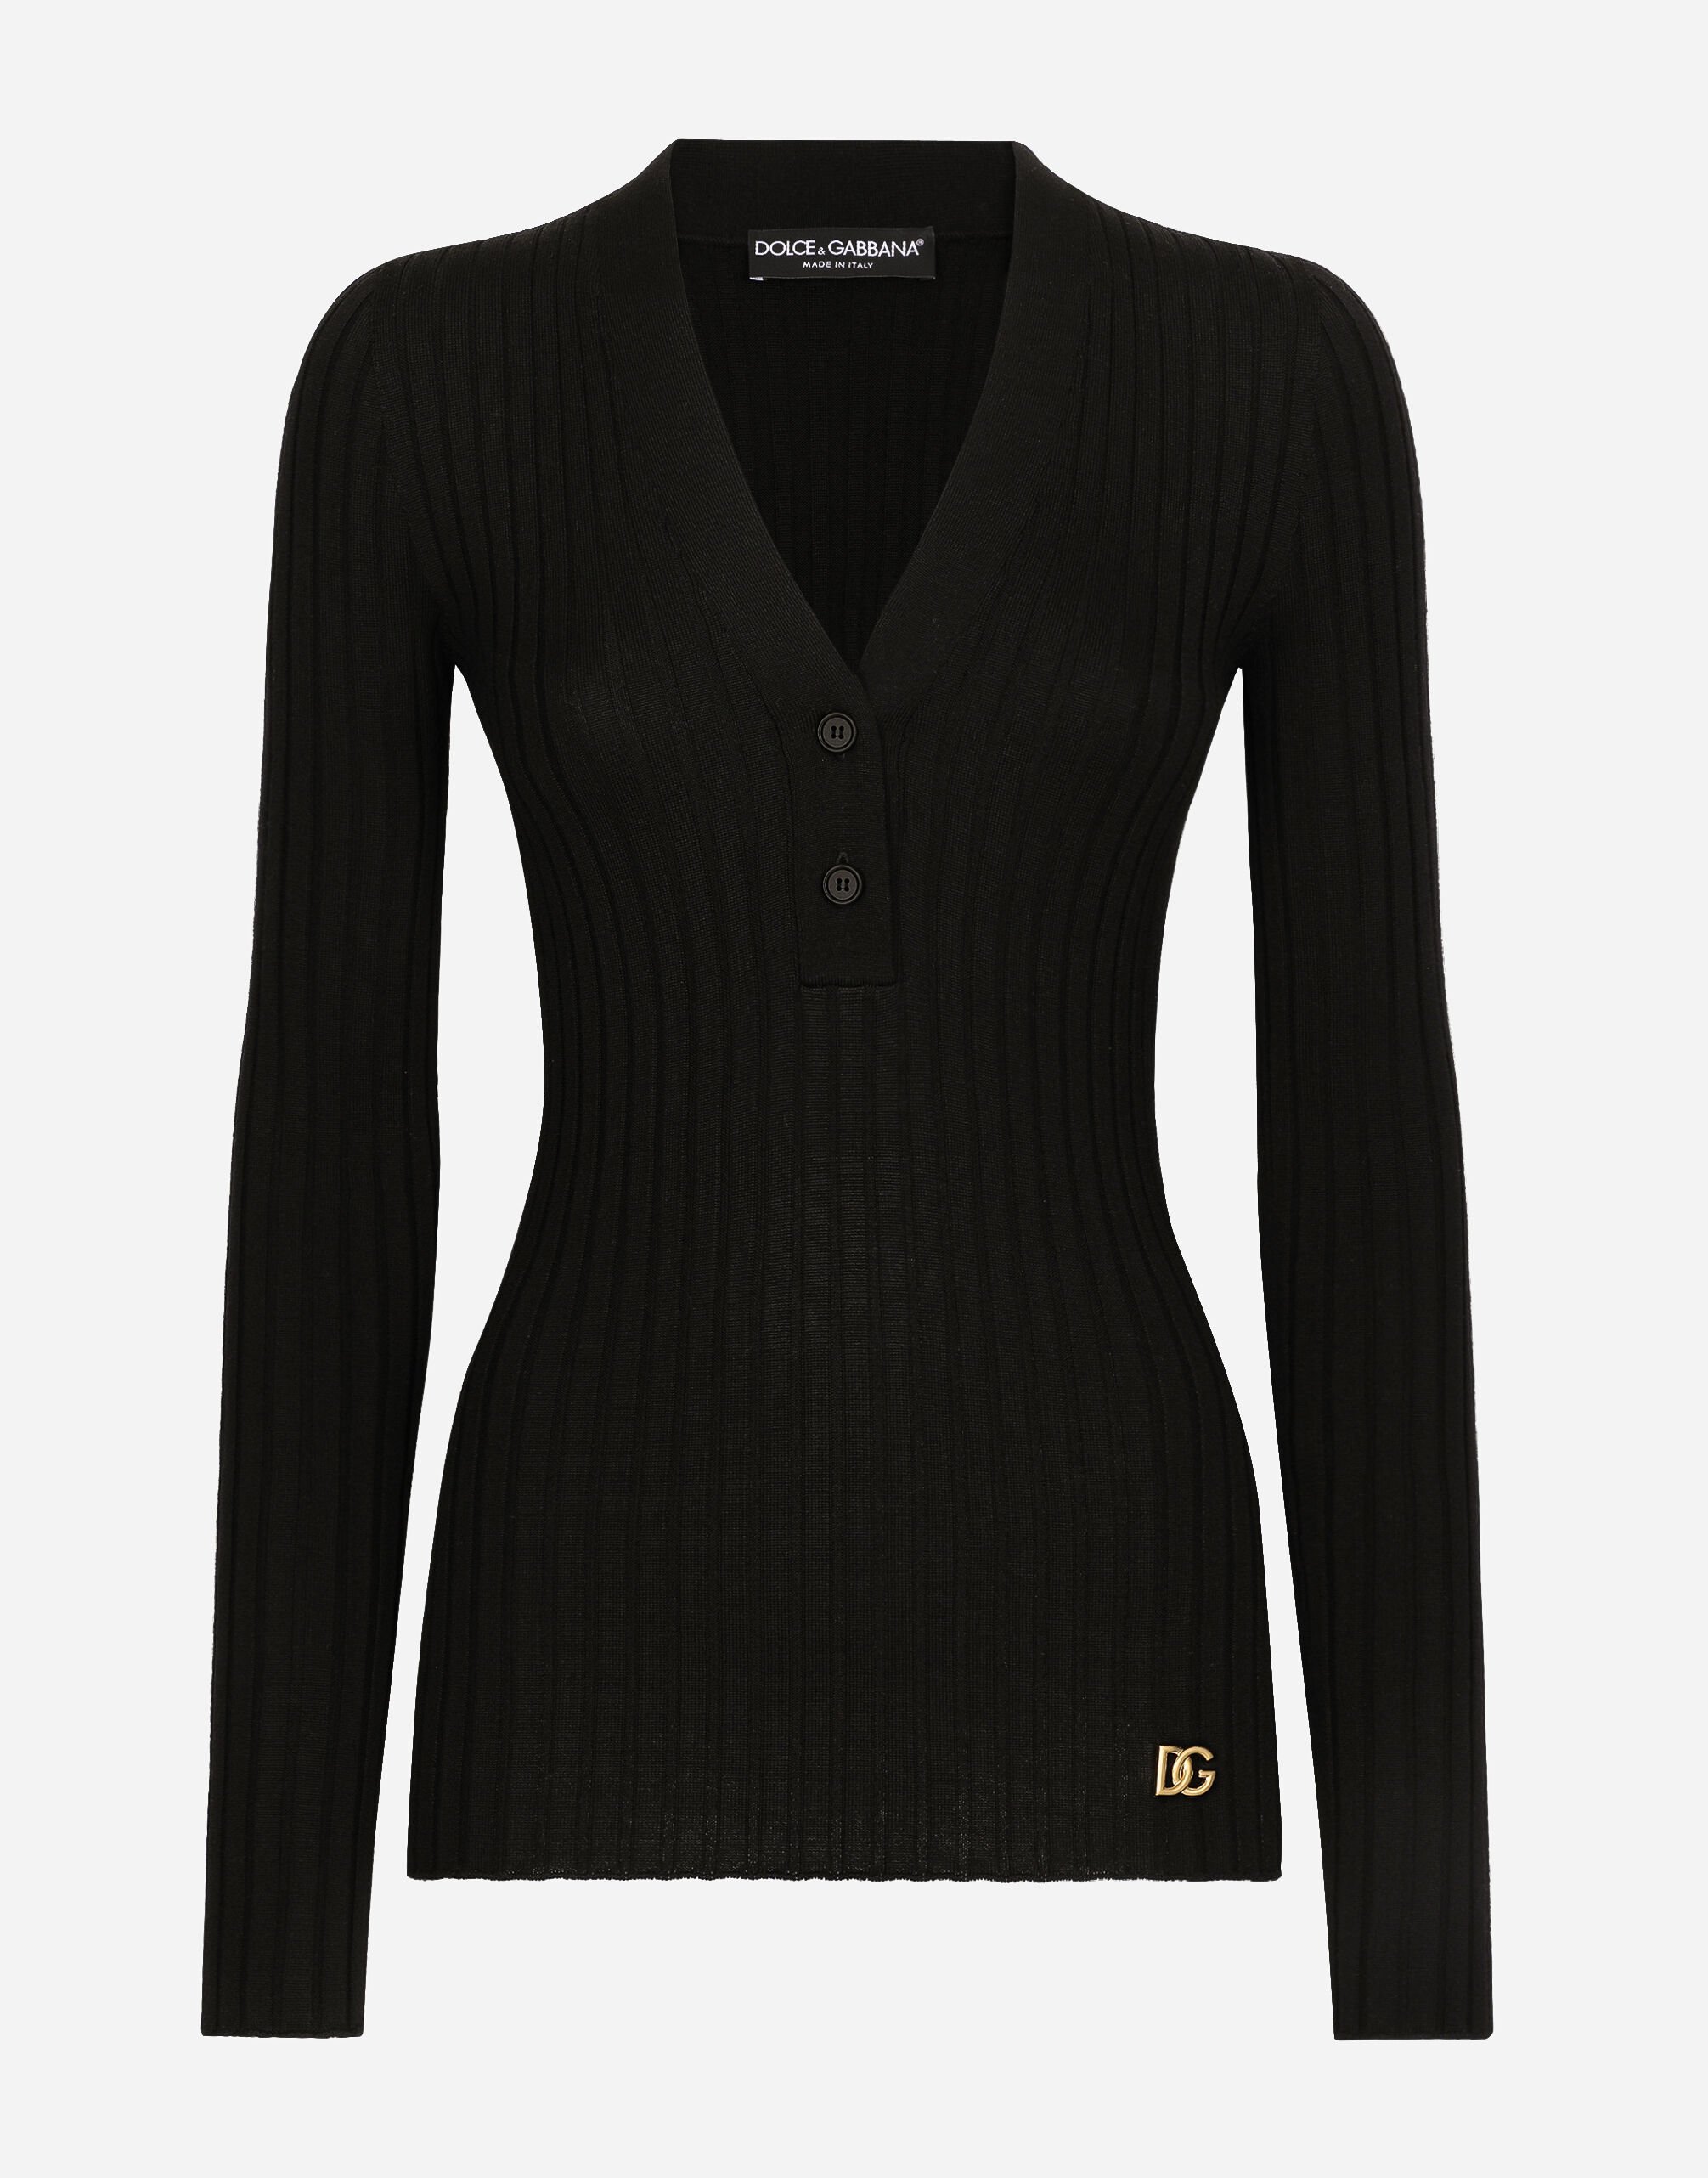 Dolce & Gabbana セーター ウール フラットリブ マルチカラー FXM23TJCVO8